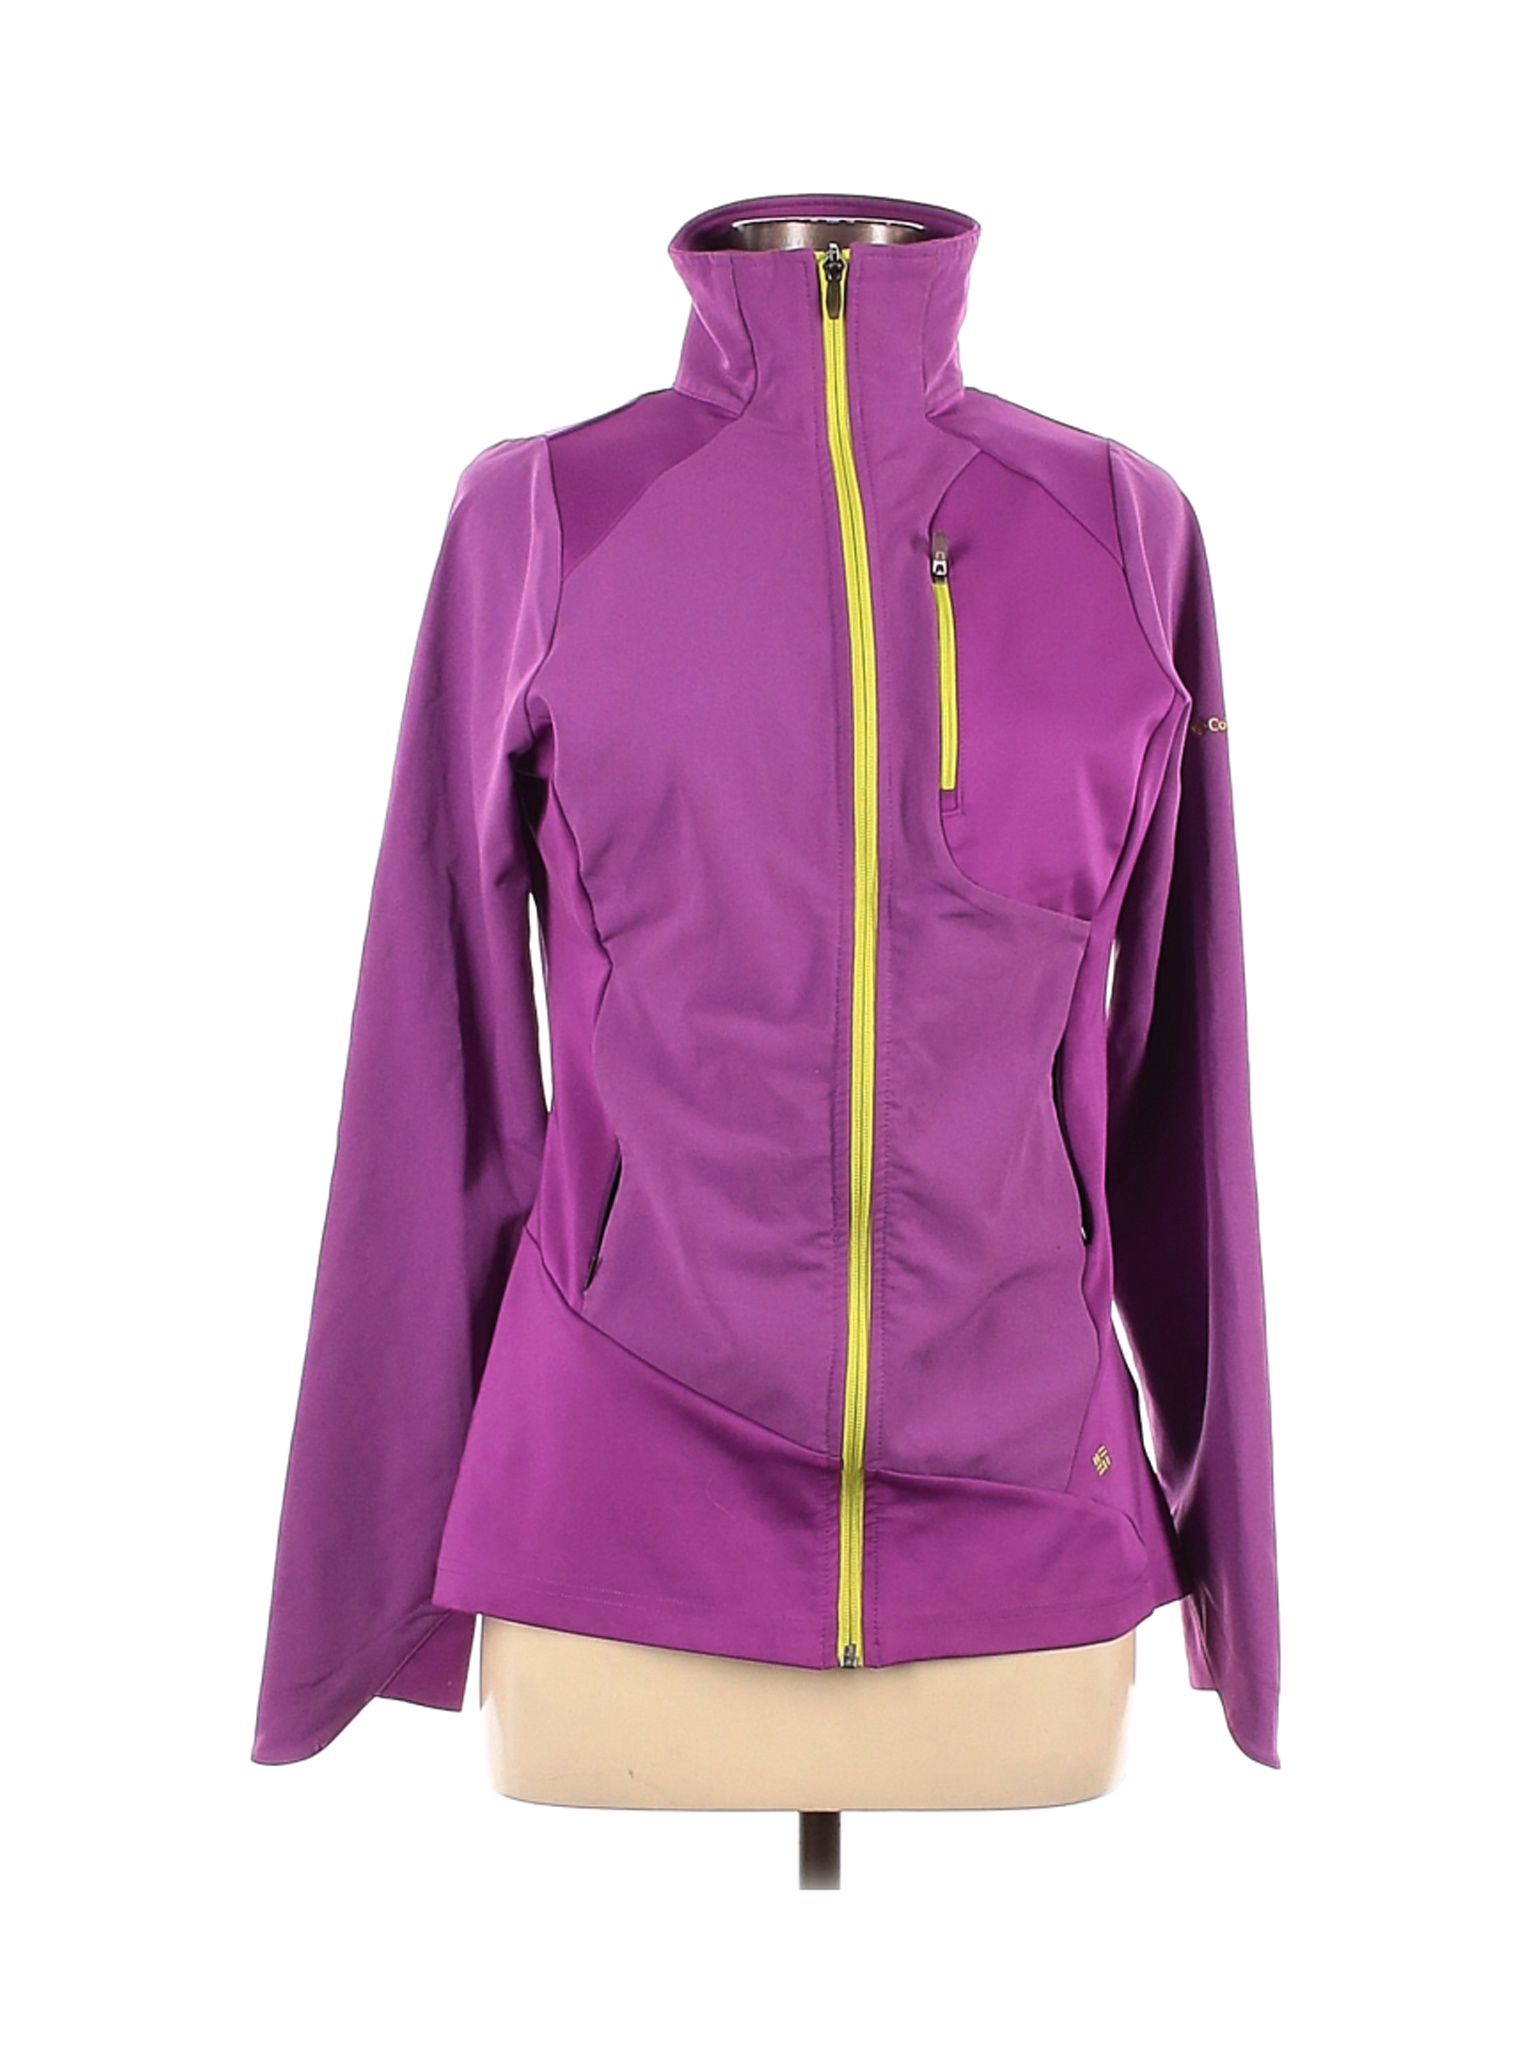 Columbia Women Purple Track Jacket M | eBay